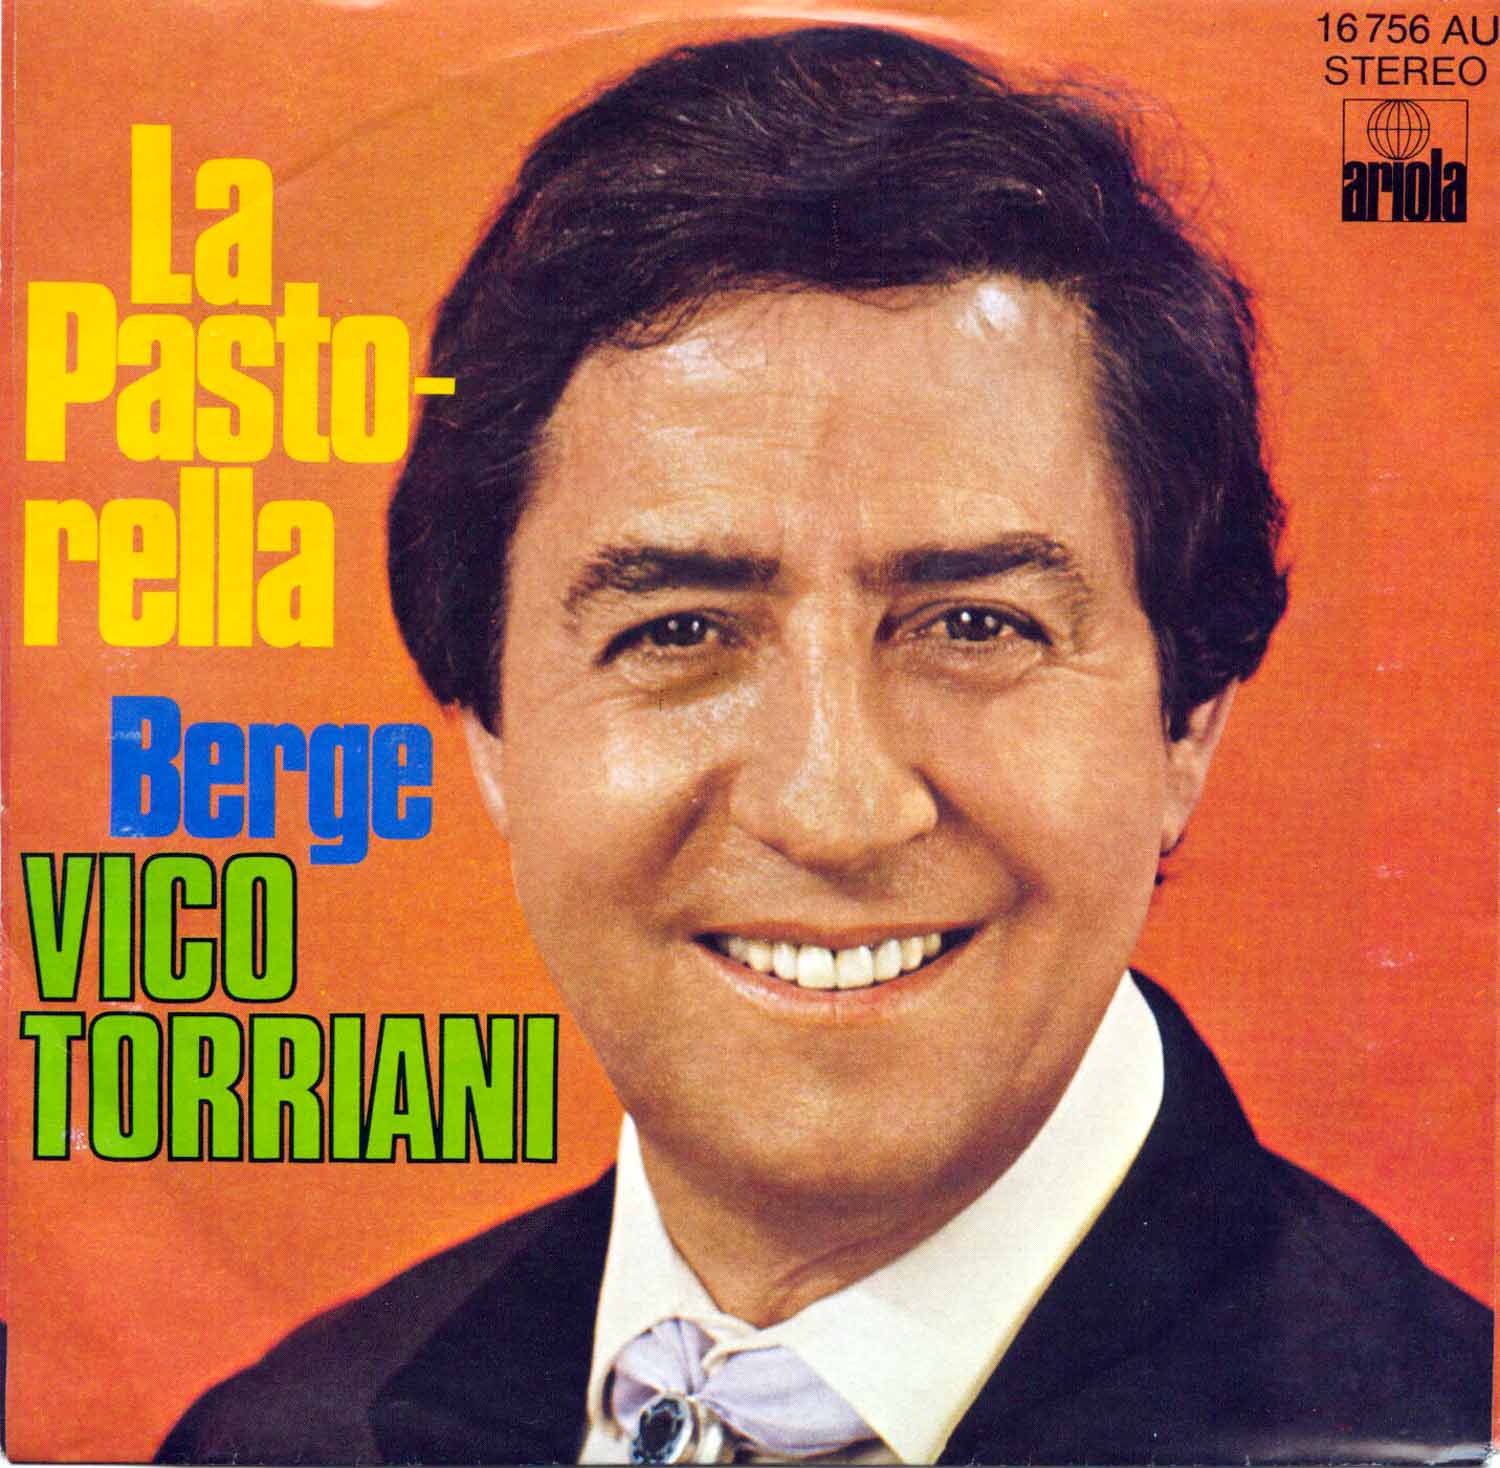 Vico Torriani  La Pastorella / Berge (16 756 AU)  *Single 7'' (Vinyl)*. 